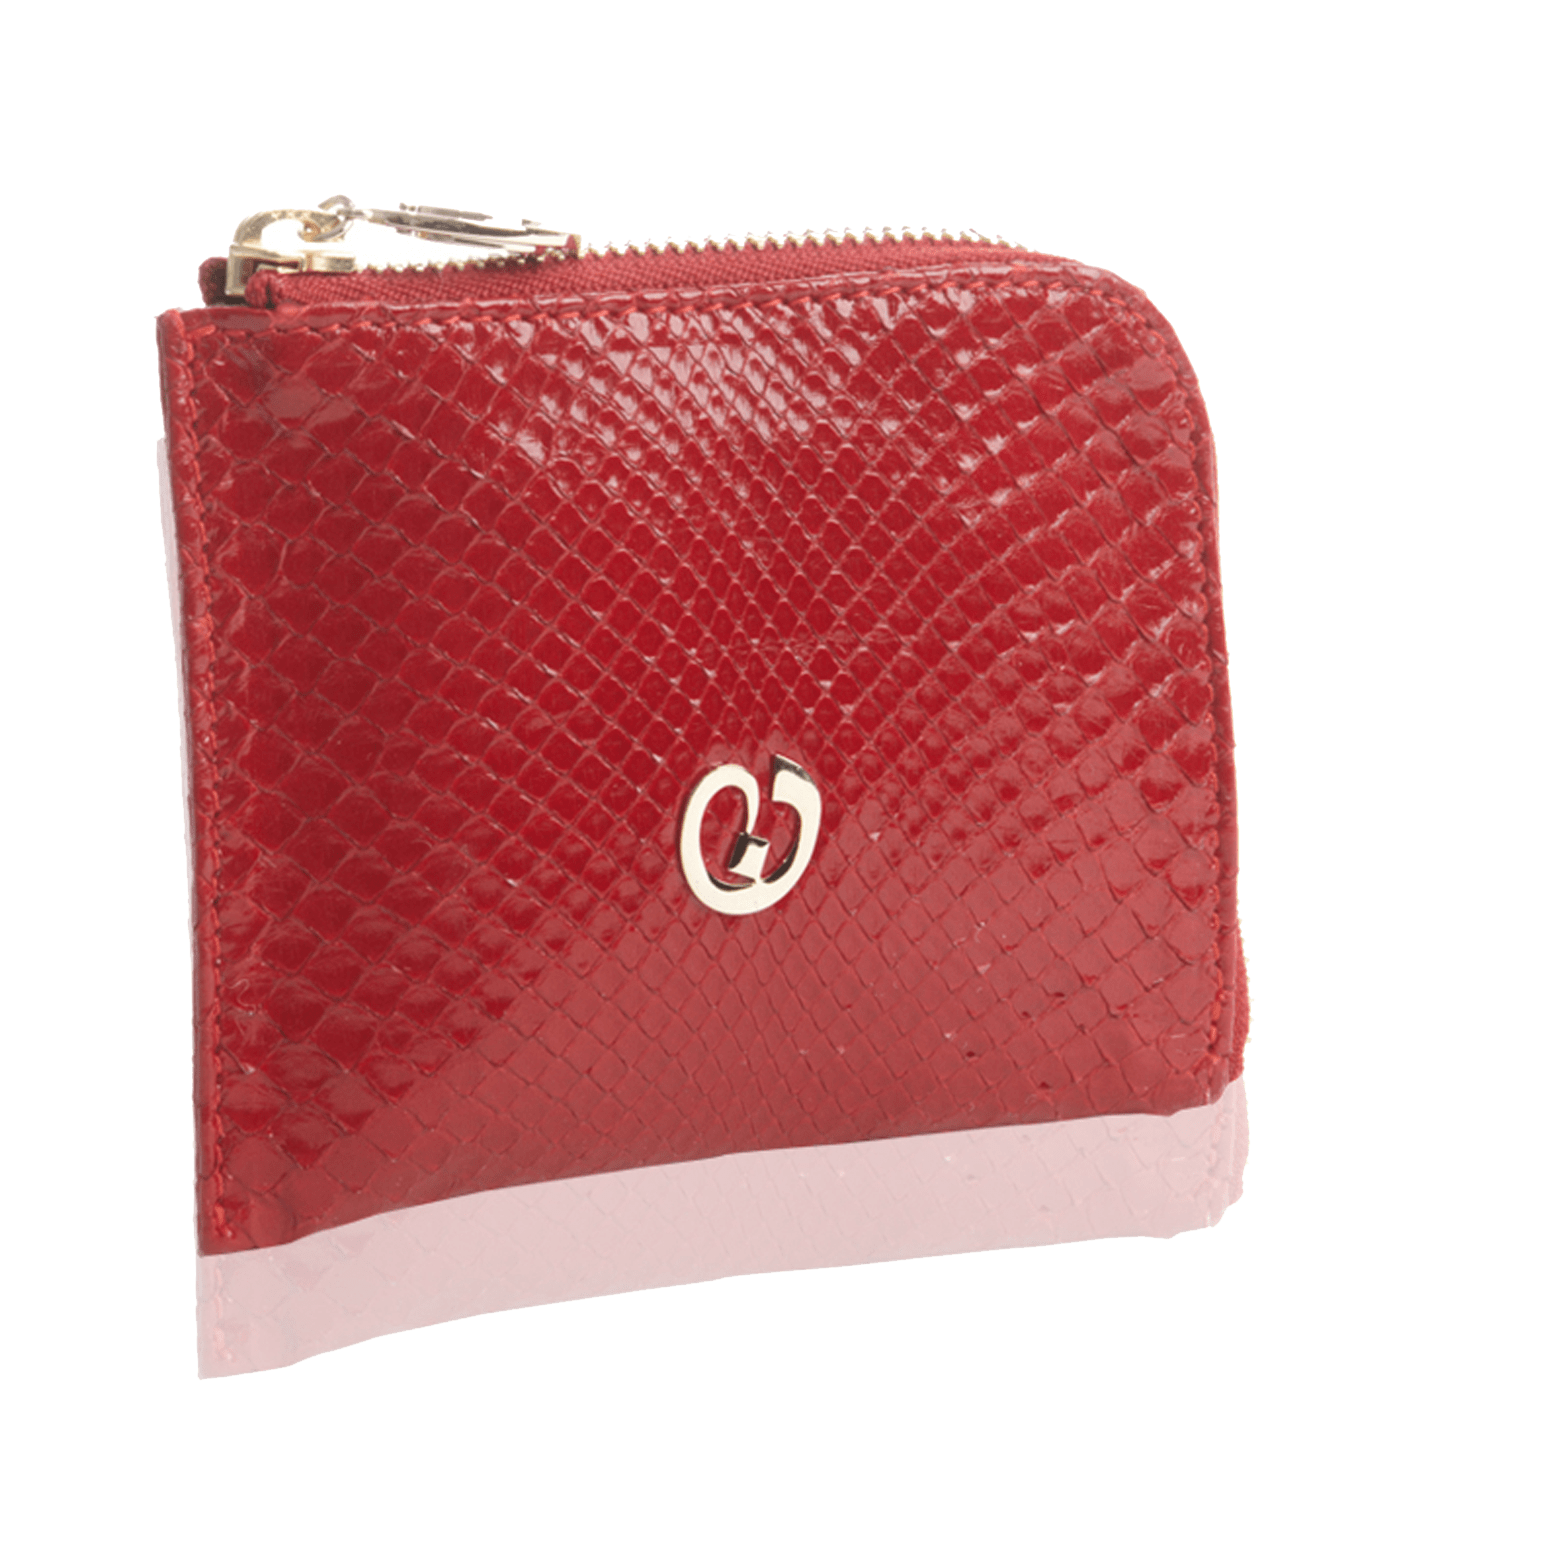 FL by NADA SAWAYA Wallet Red / Light gold Small Square Zip-Around Python Wallet